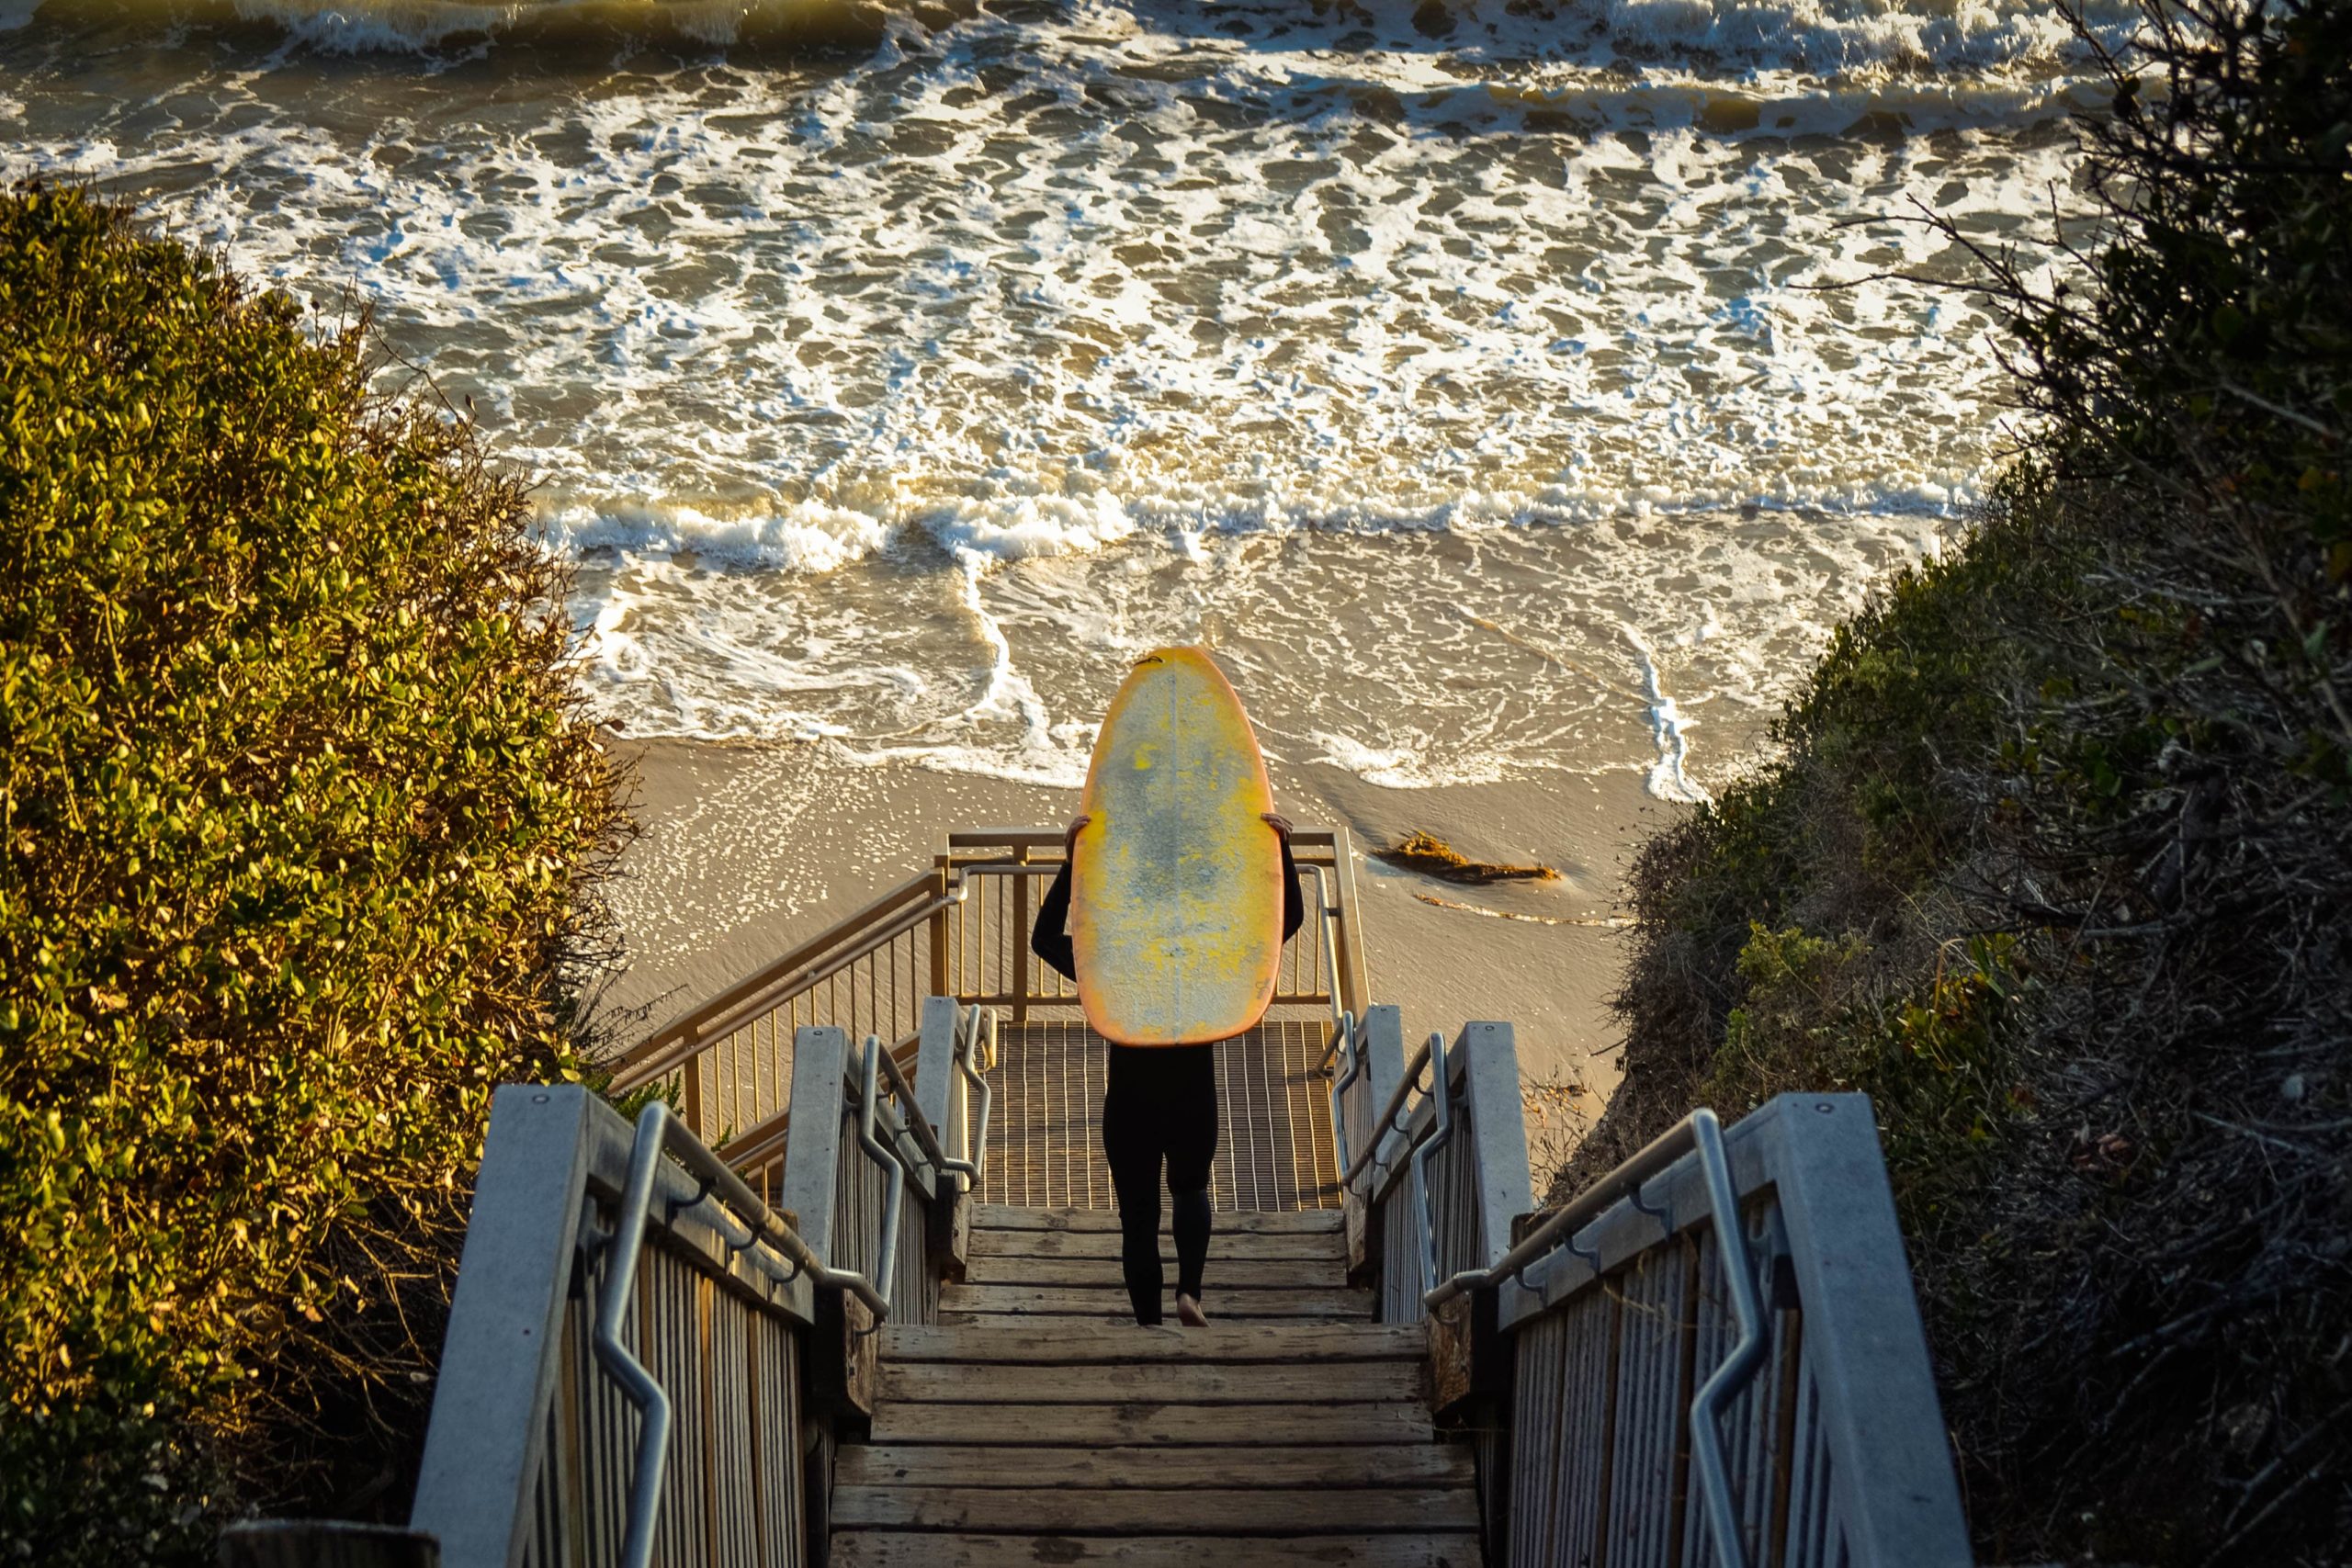 Surfing Santa Barbara